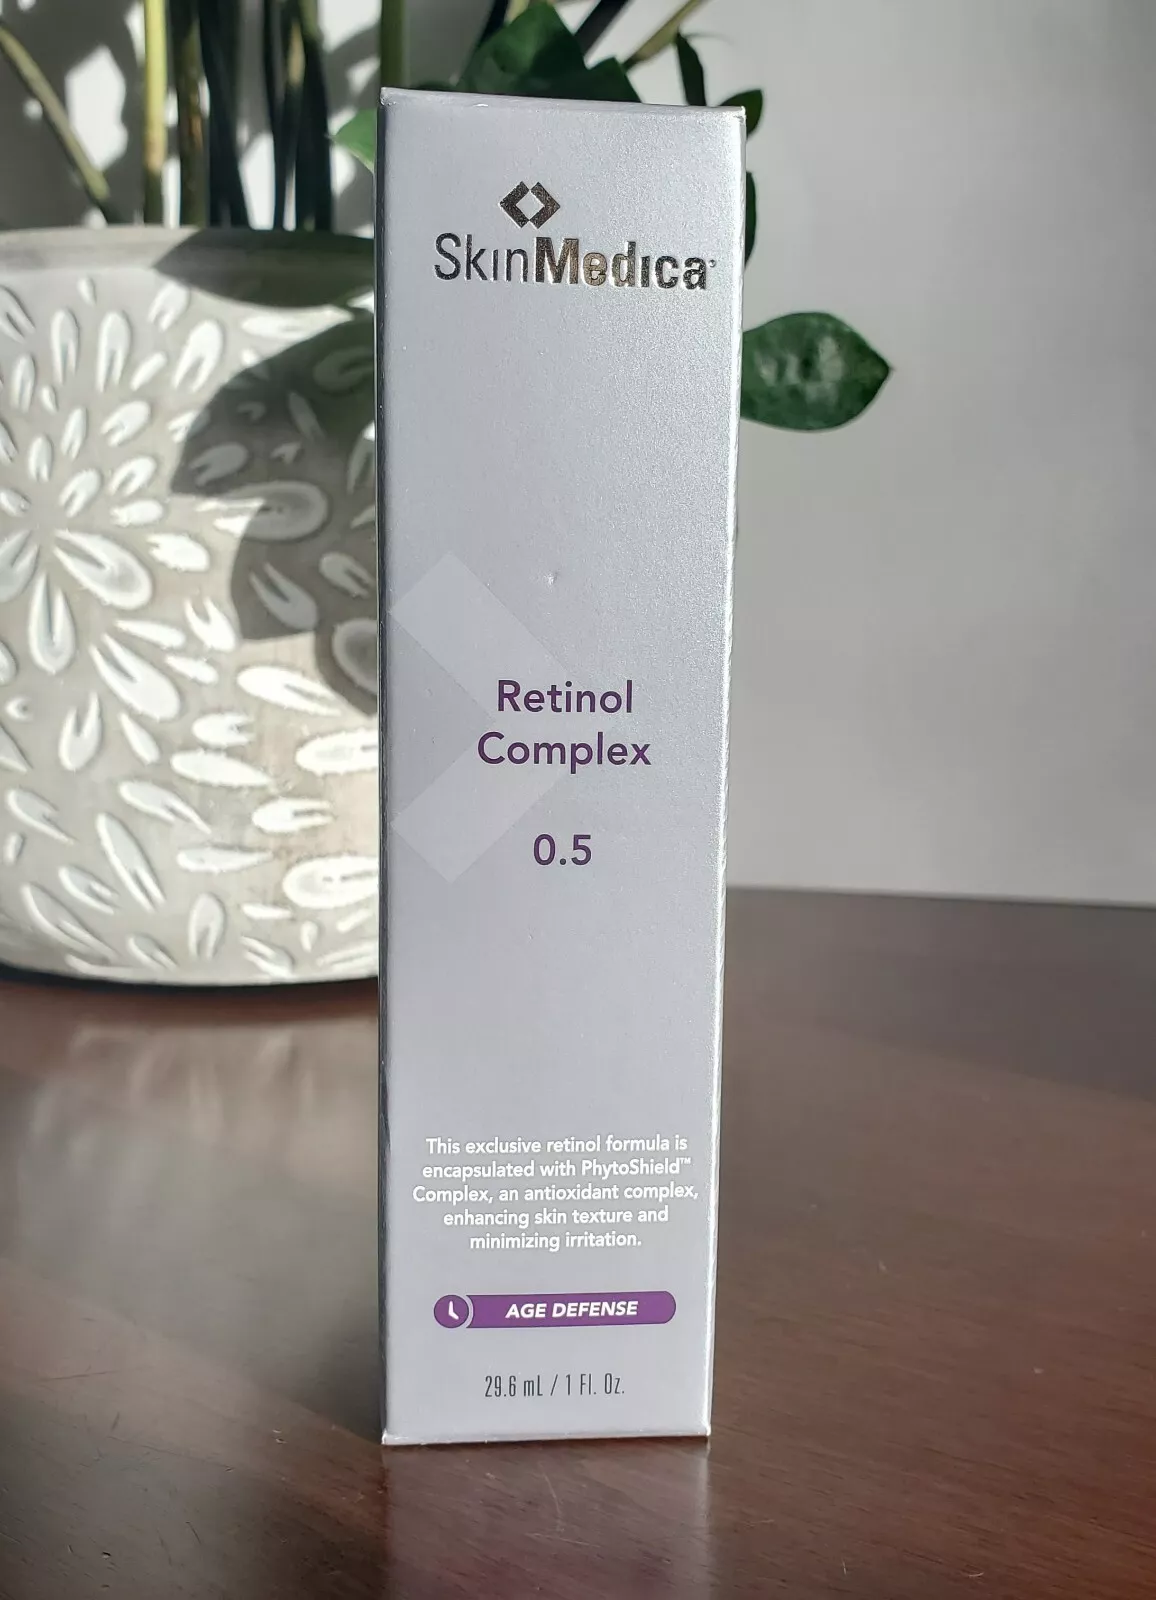 SkinMedica RETINOL COMPLEX 0.5 - 29.6 ml / 1 fl oz. - Sealed Box  Super ... - $49.88